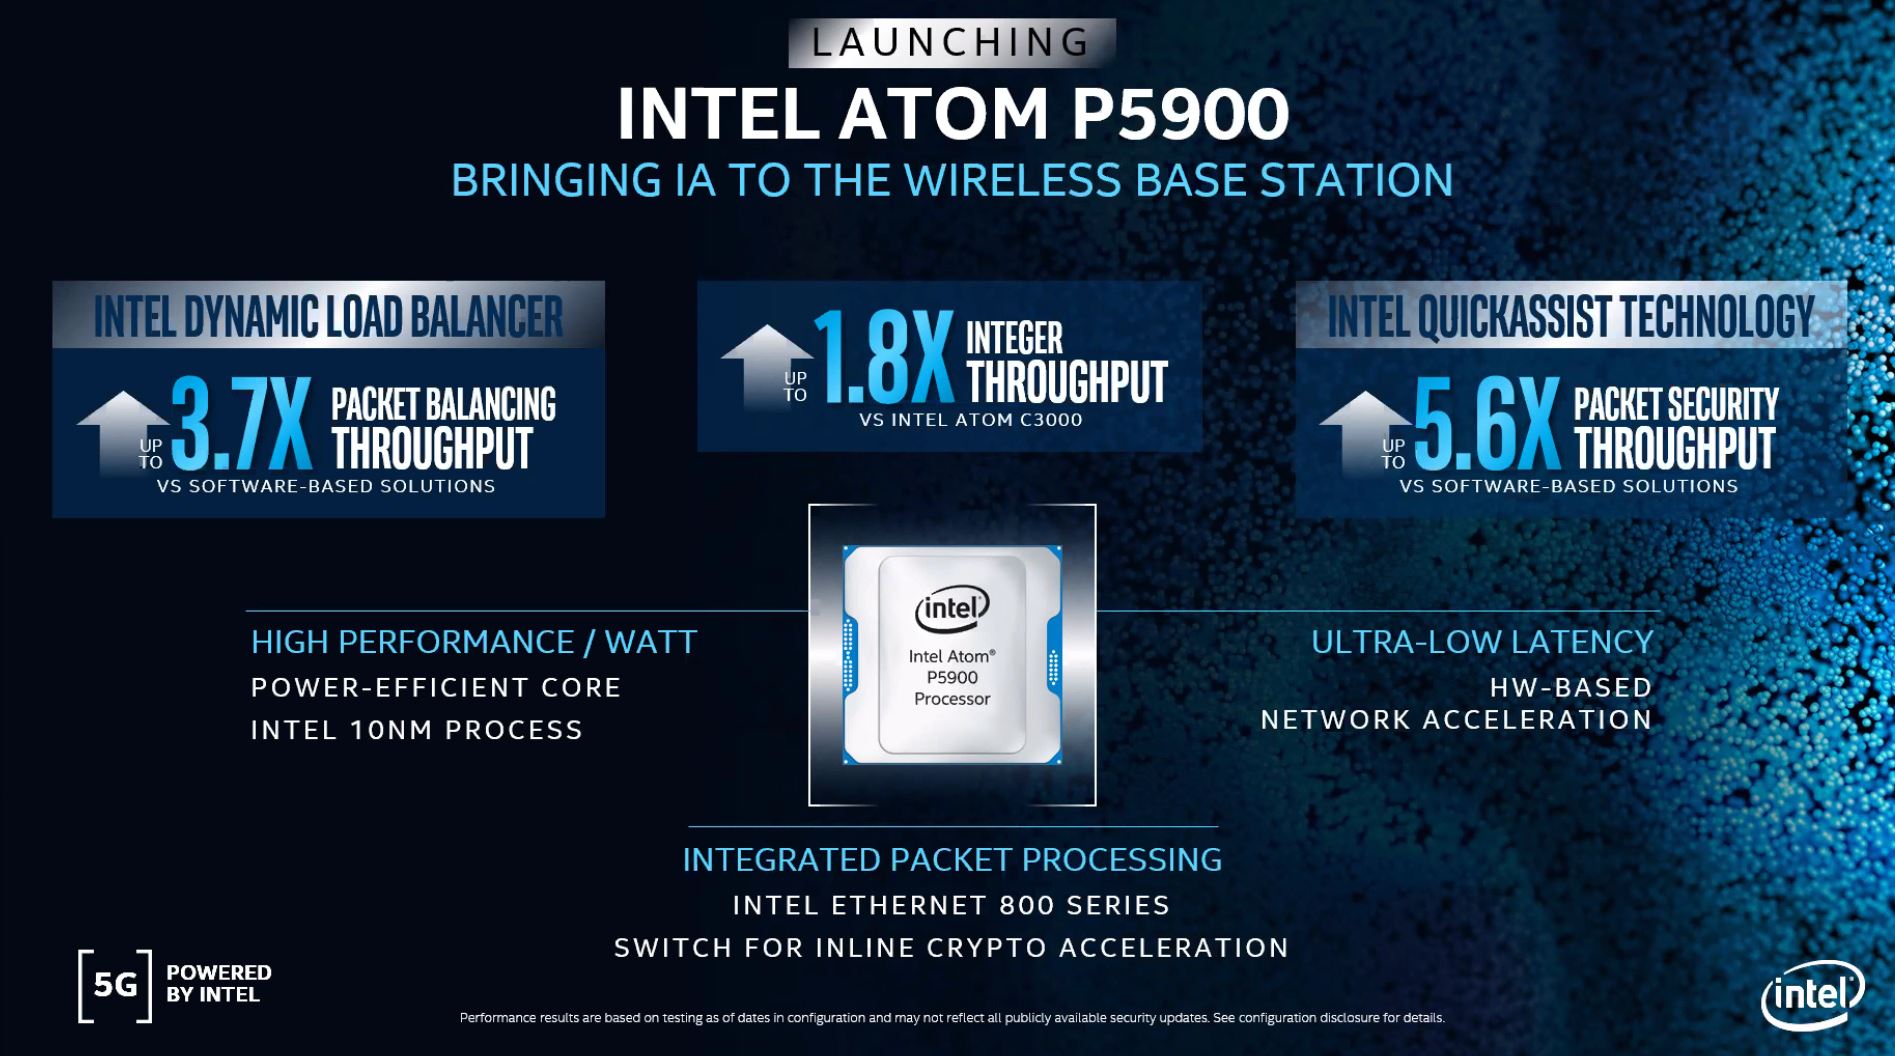 intel atom p5900 overview slide อินเทลเปิดตัวซีพียู Intel Atom P5900 ขนาดสถาปัตย์ 10nm SoC เน้นใช้งานโครงสร้างพื้นฐานเครือข่ายระบบ 5G 